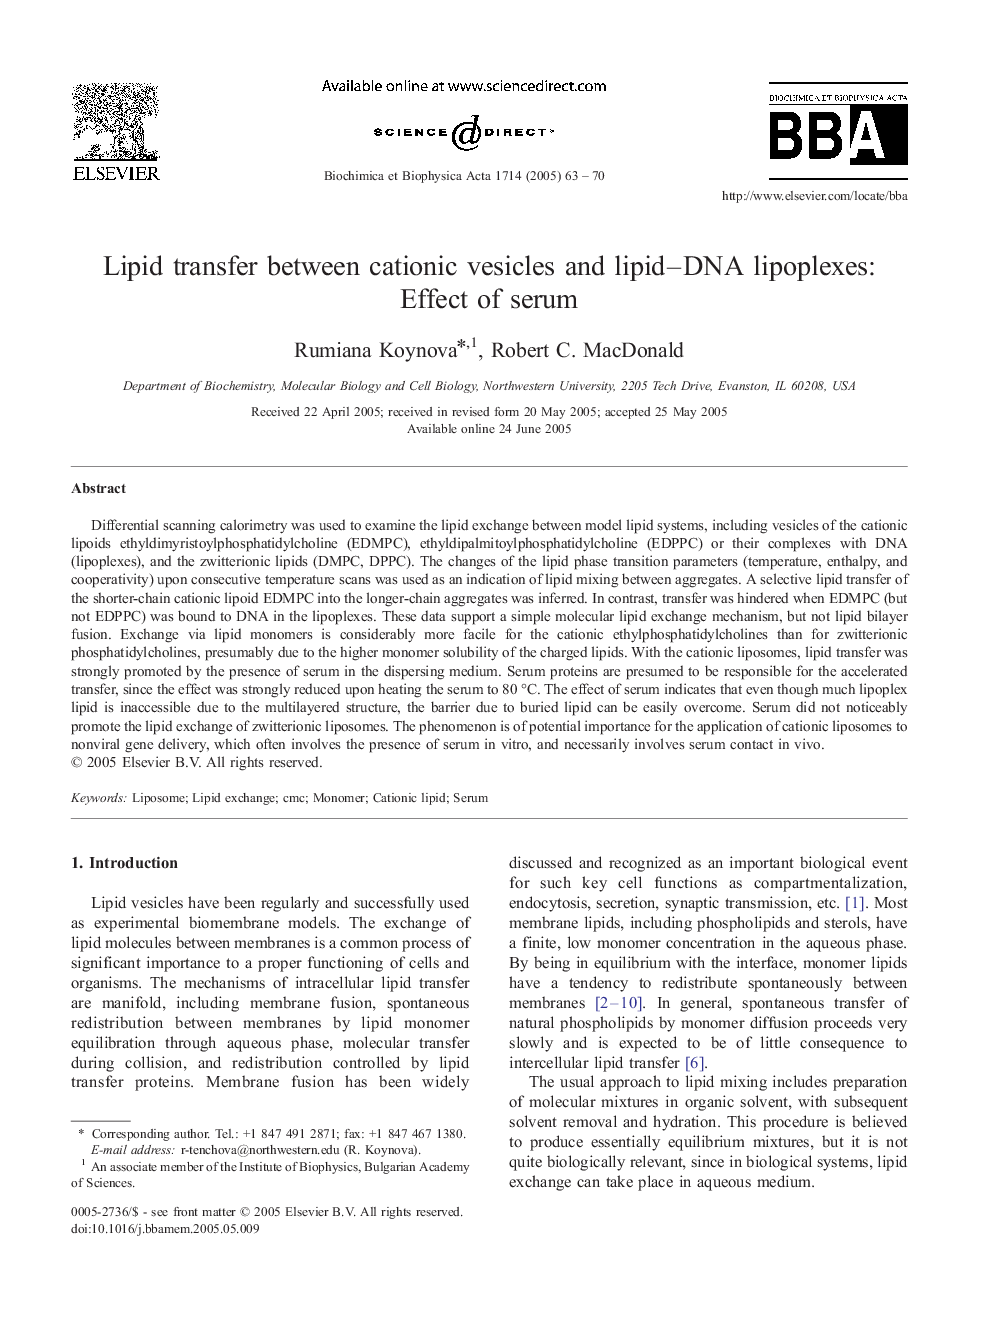 Lipid transfer between cationic vesicles and lipid-DNA lipoplexes: Effect of serum